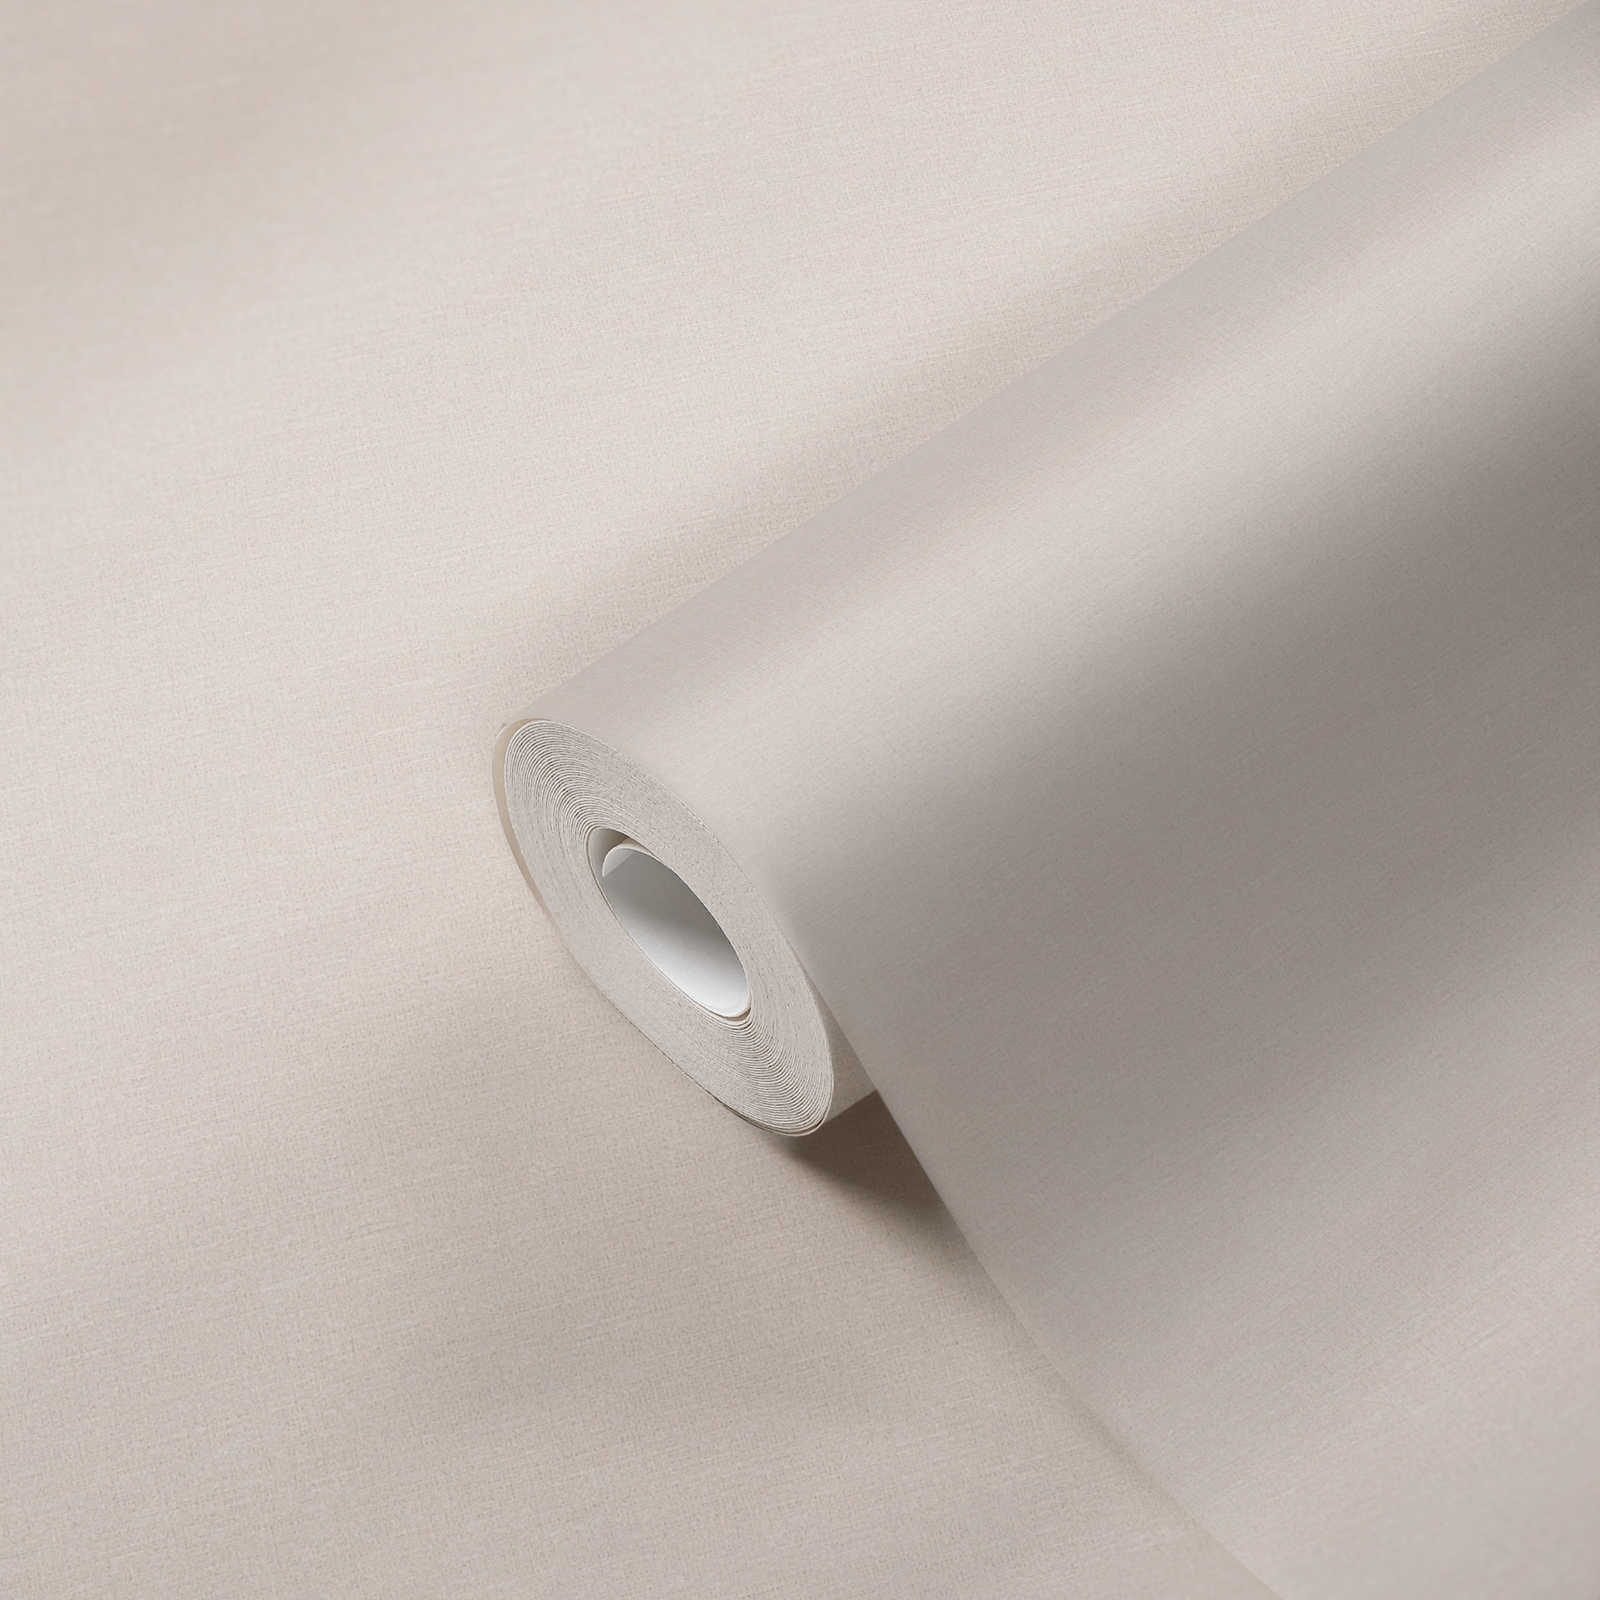             Plain non-woven wallpaper with linen texture - beige
        